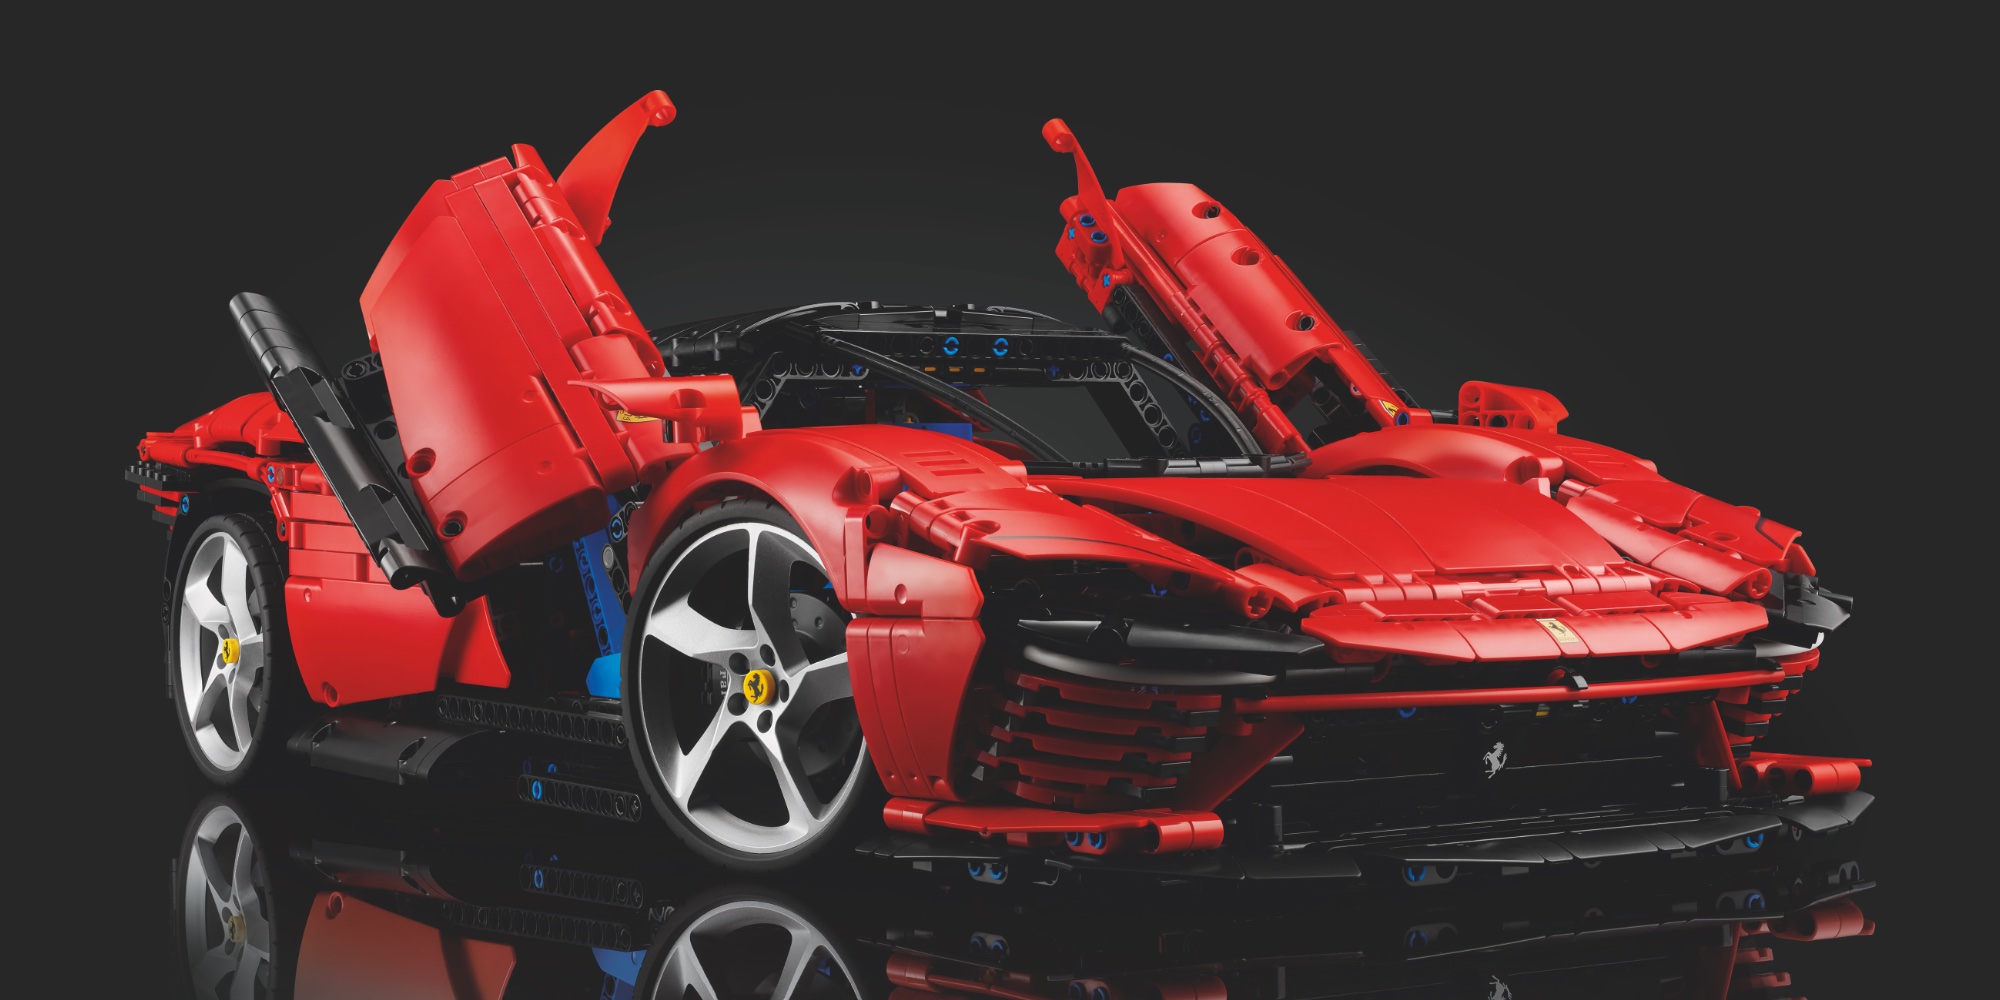 LEGO Ferrari Daytona SP3 sees first discount to $360, plus more